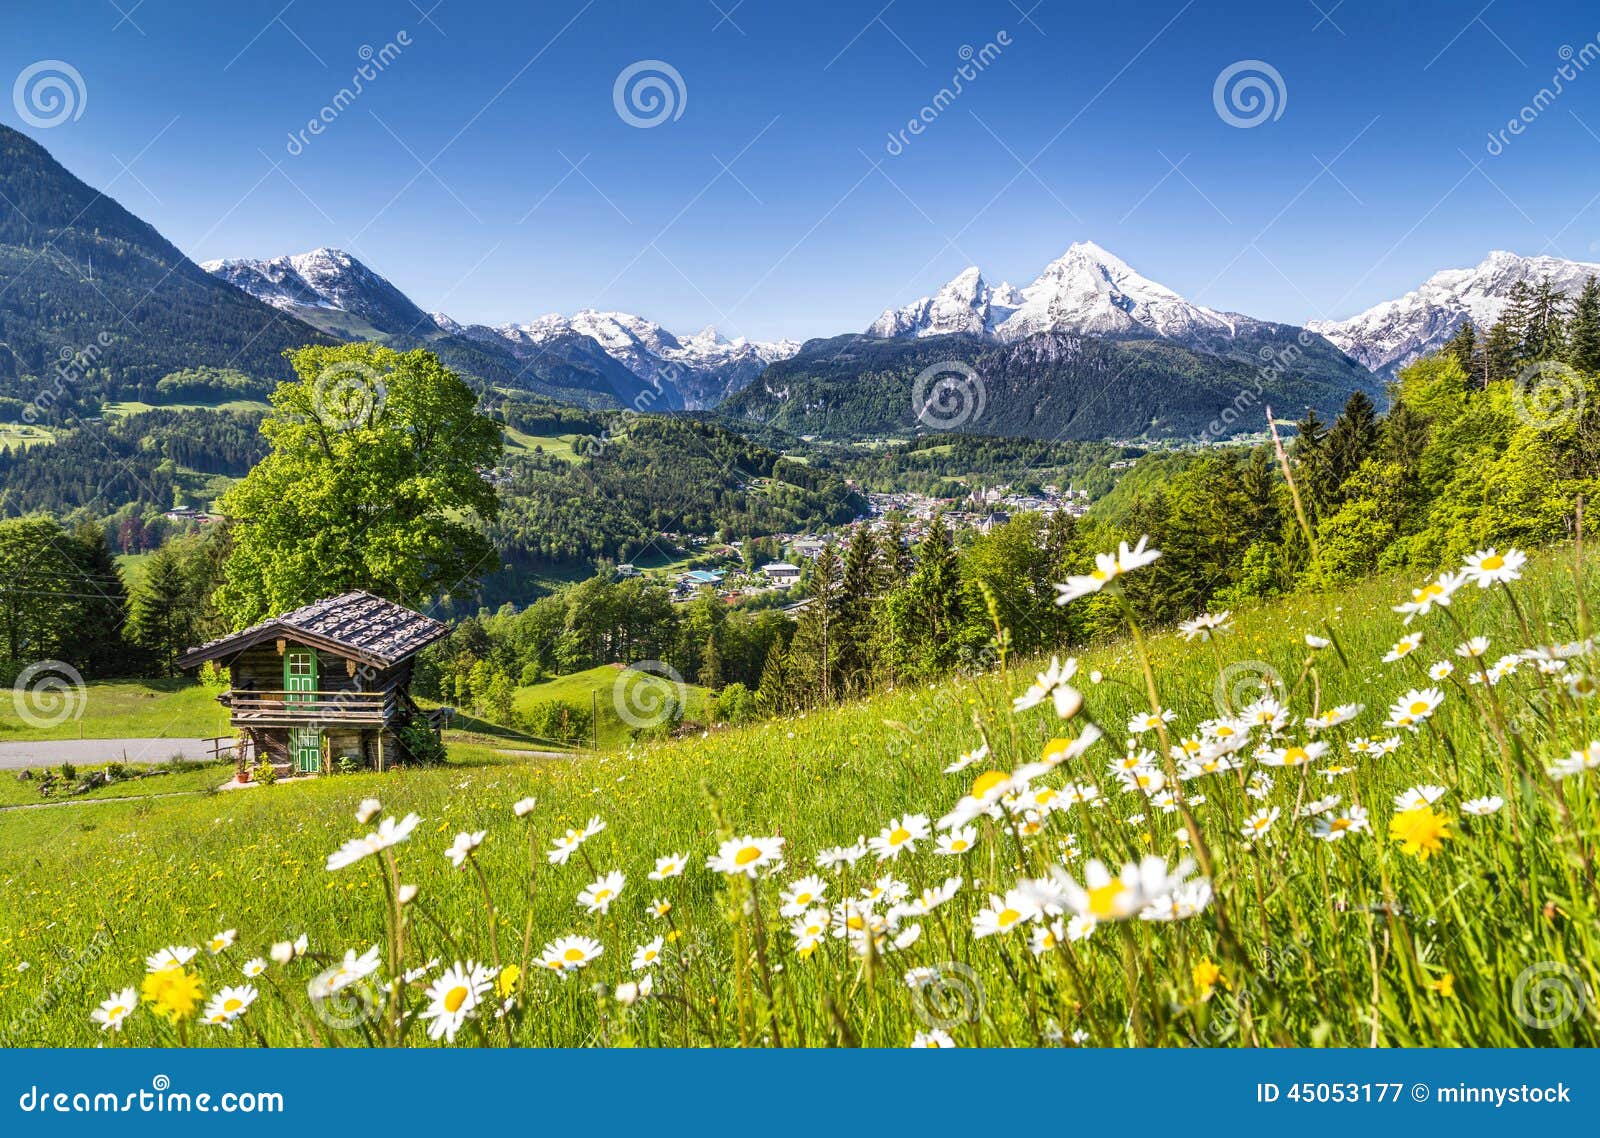 idyllic landscape in the bavarian alps, berchtesgaden, germany